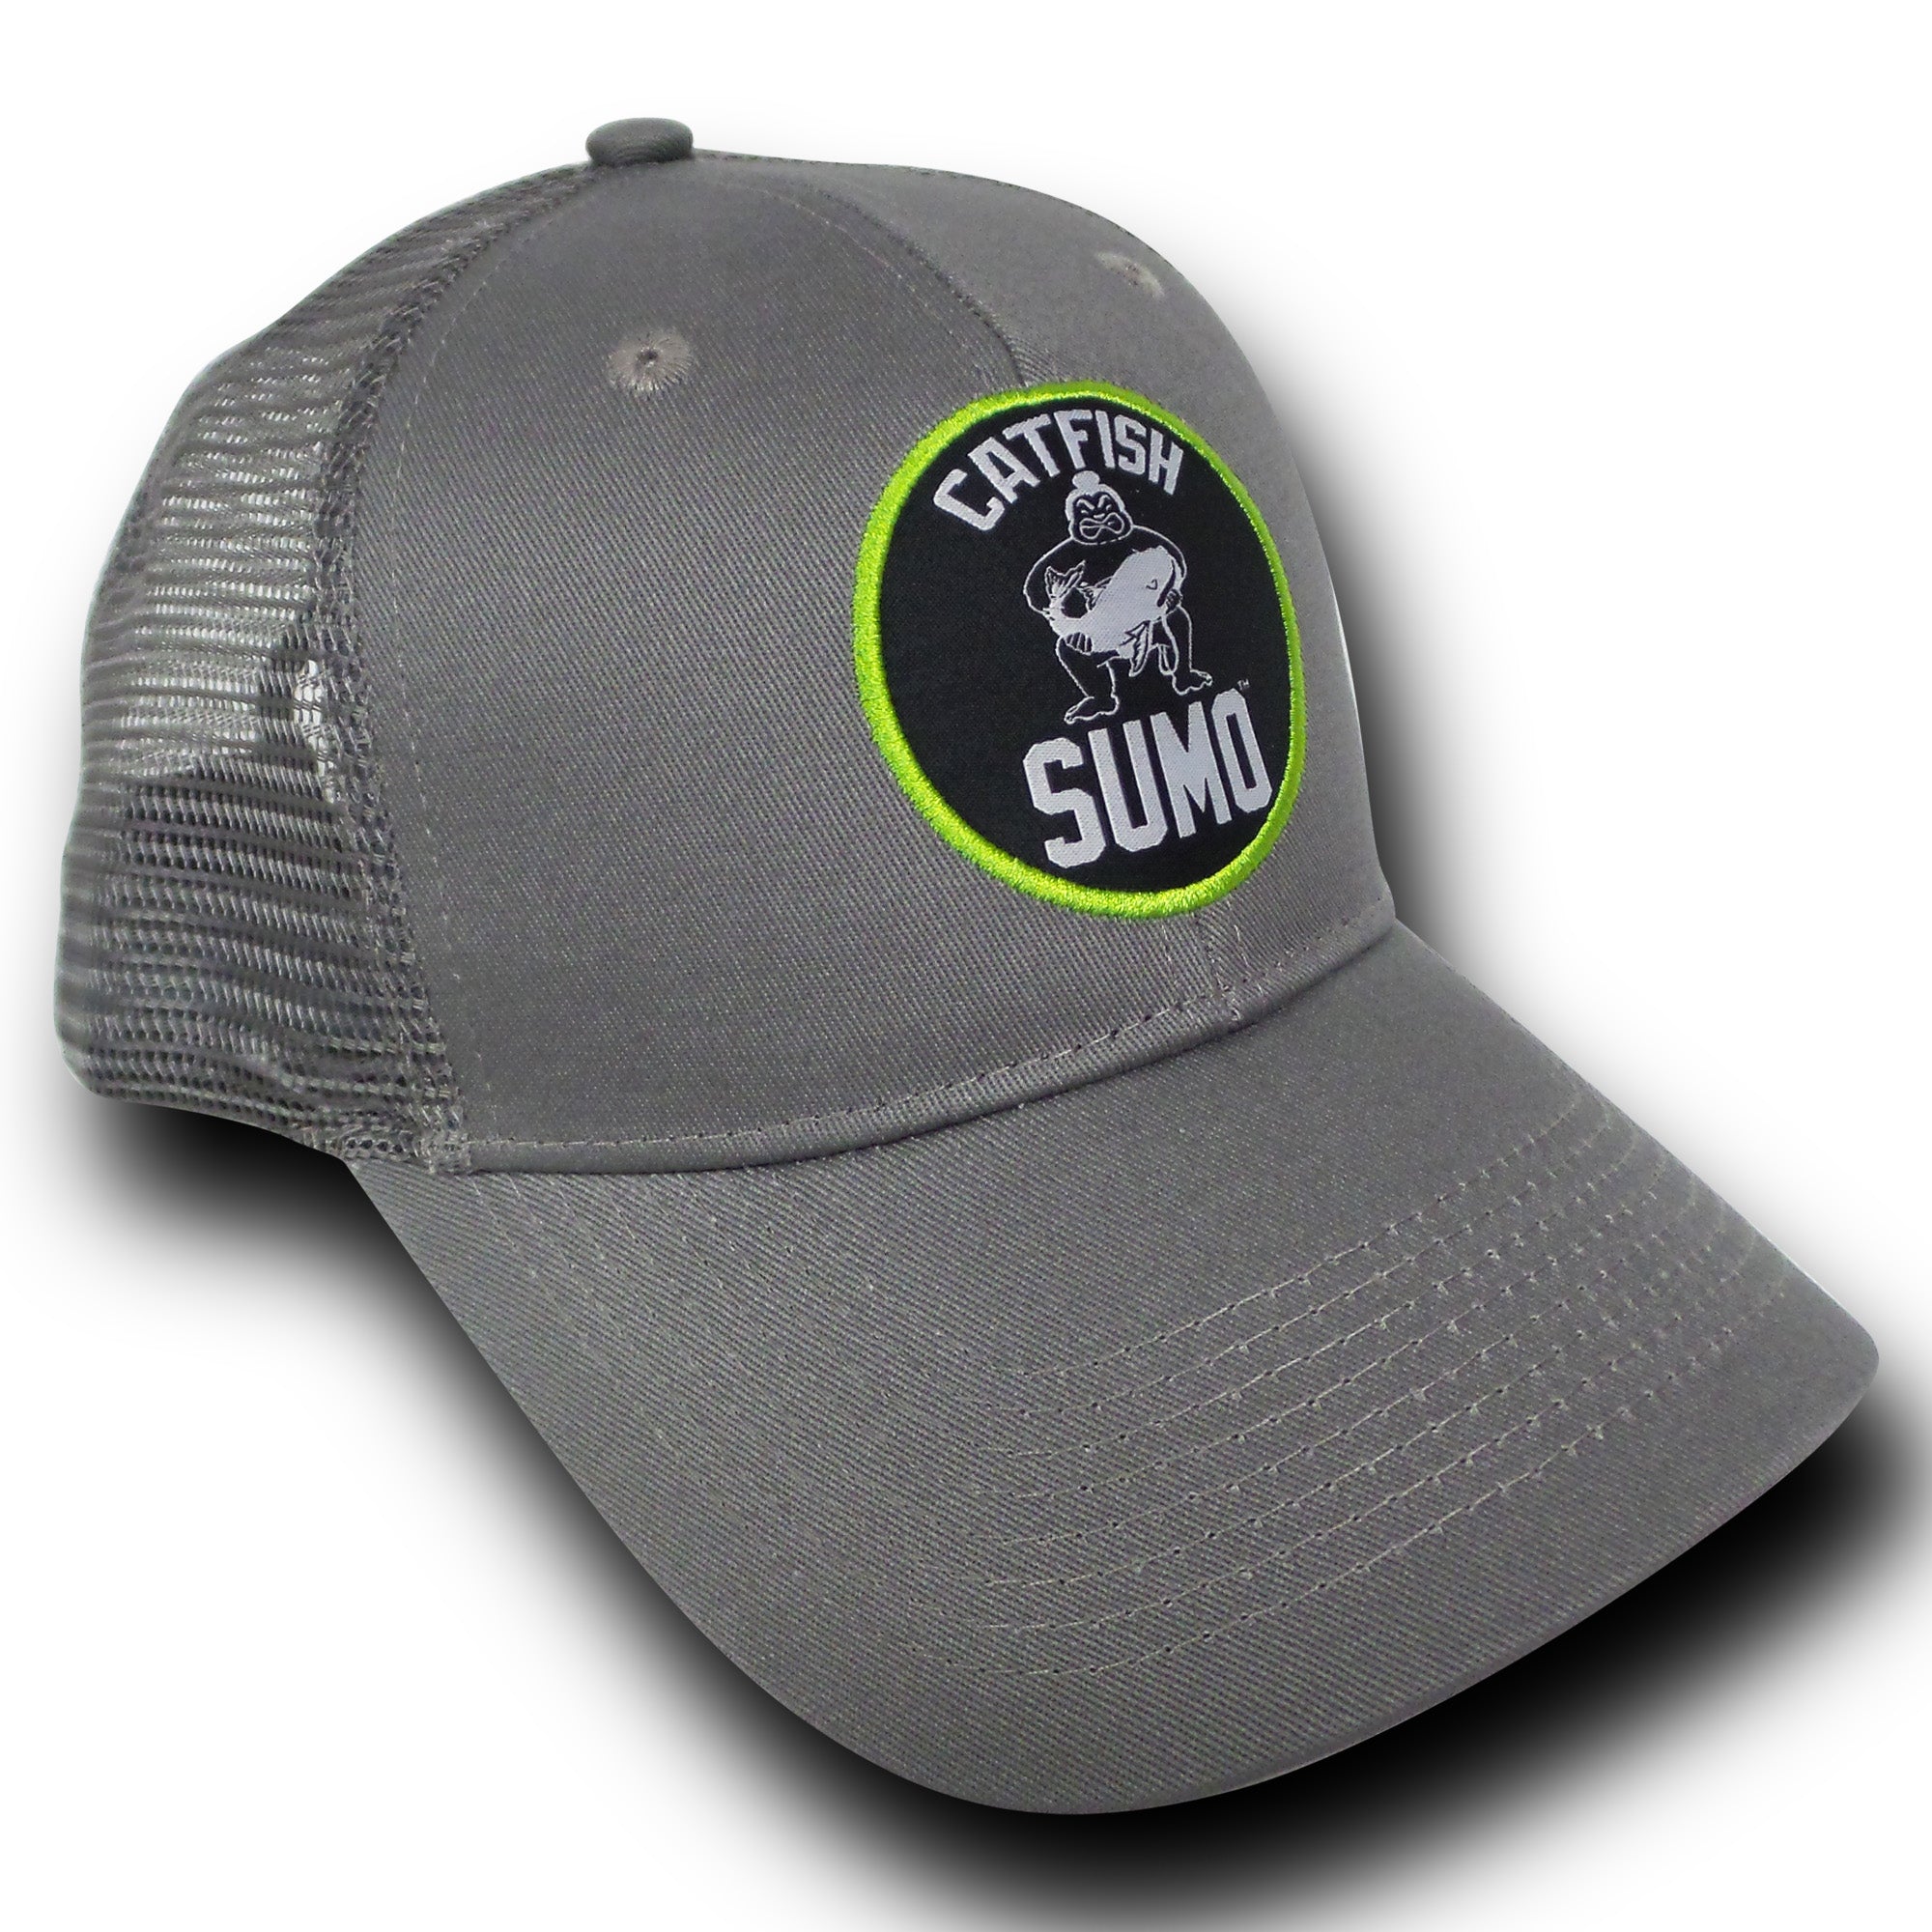 Catfish Sumo Snapback Trucker Hat - Gray Front/Gray Mesh